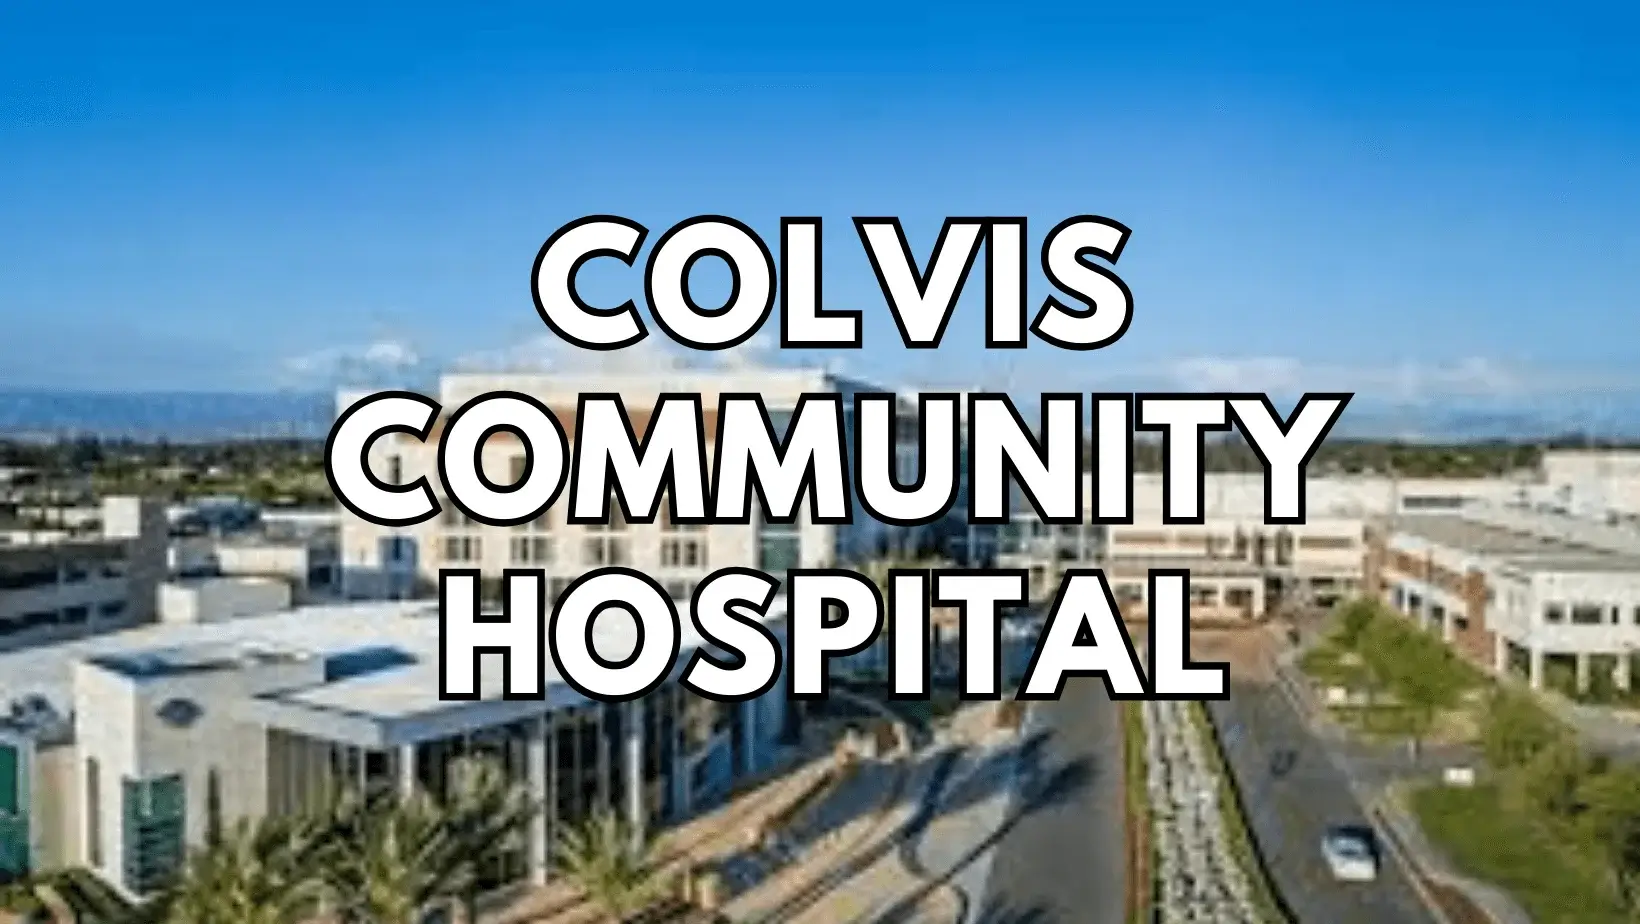 colvis community hospital featured image